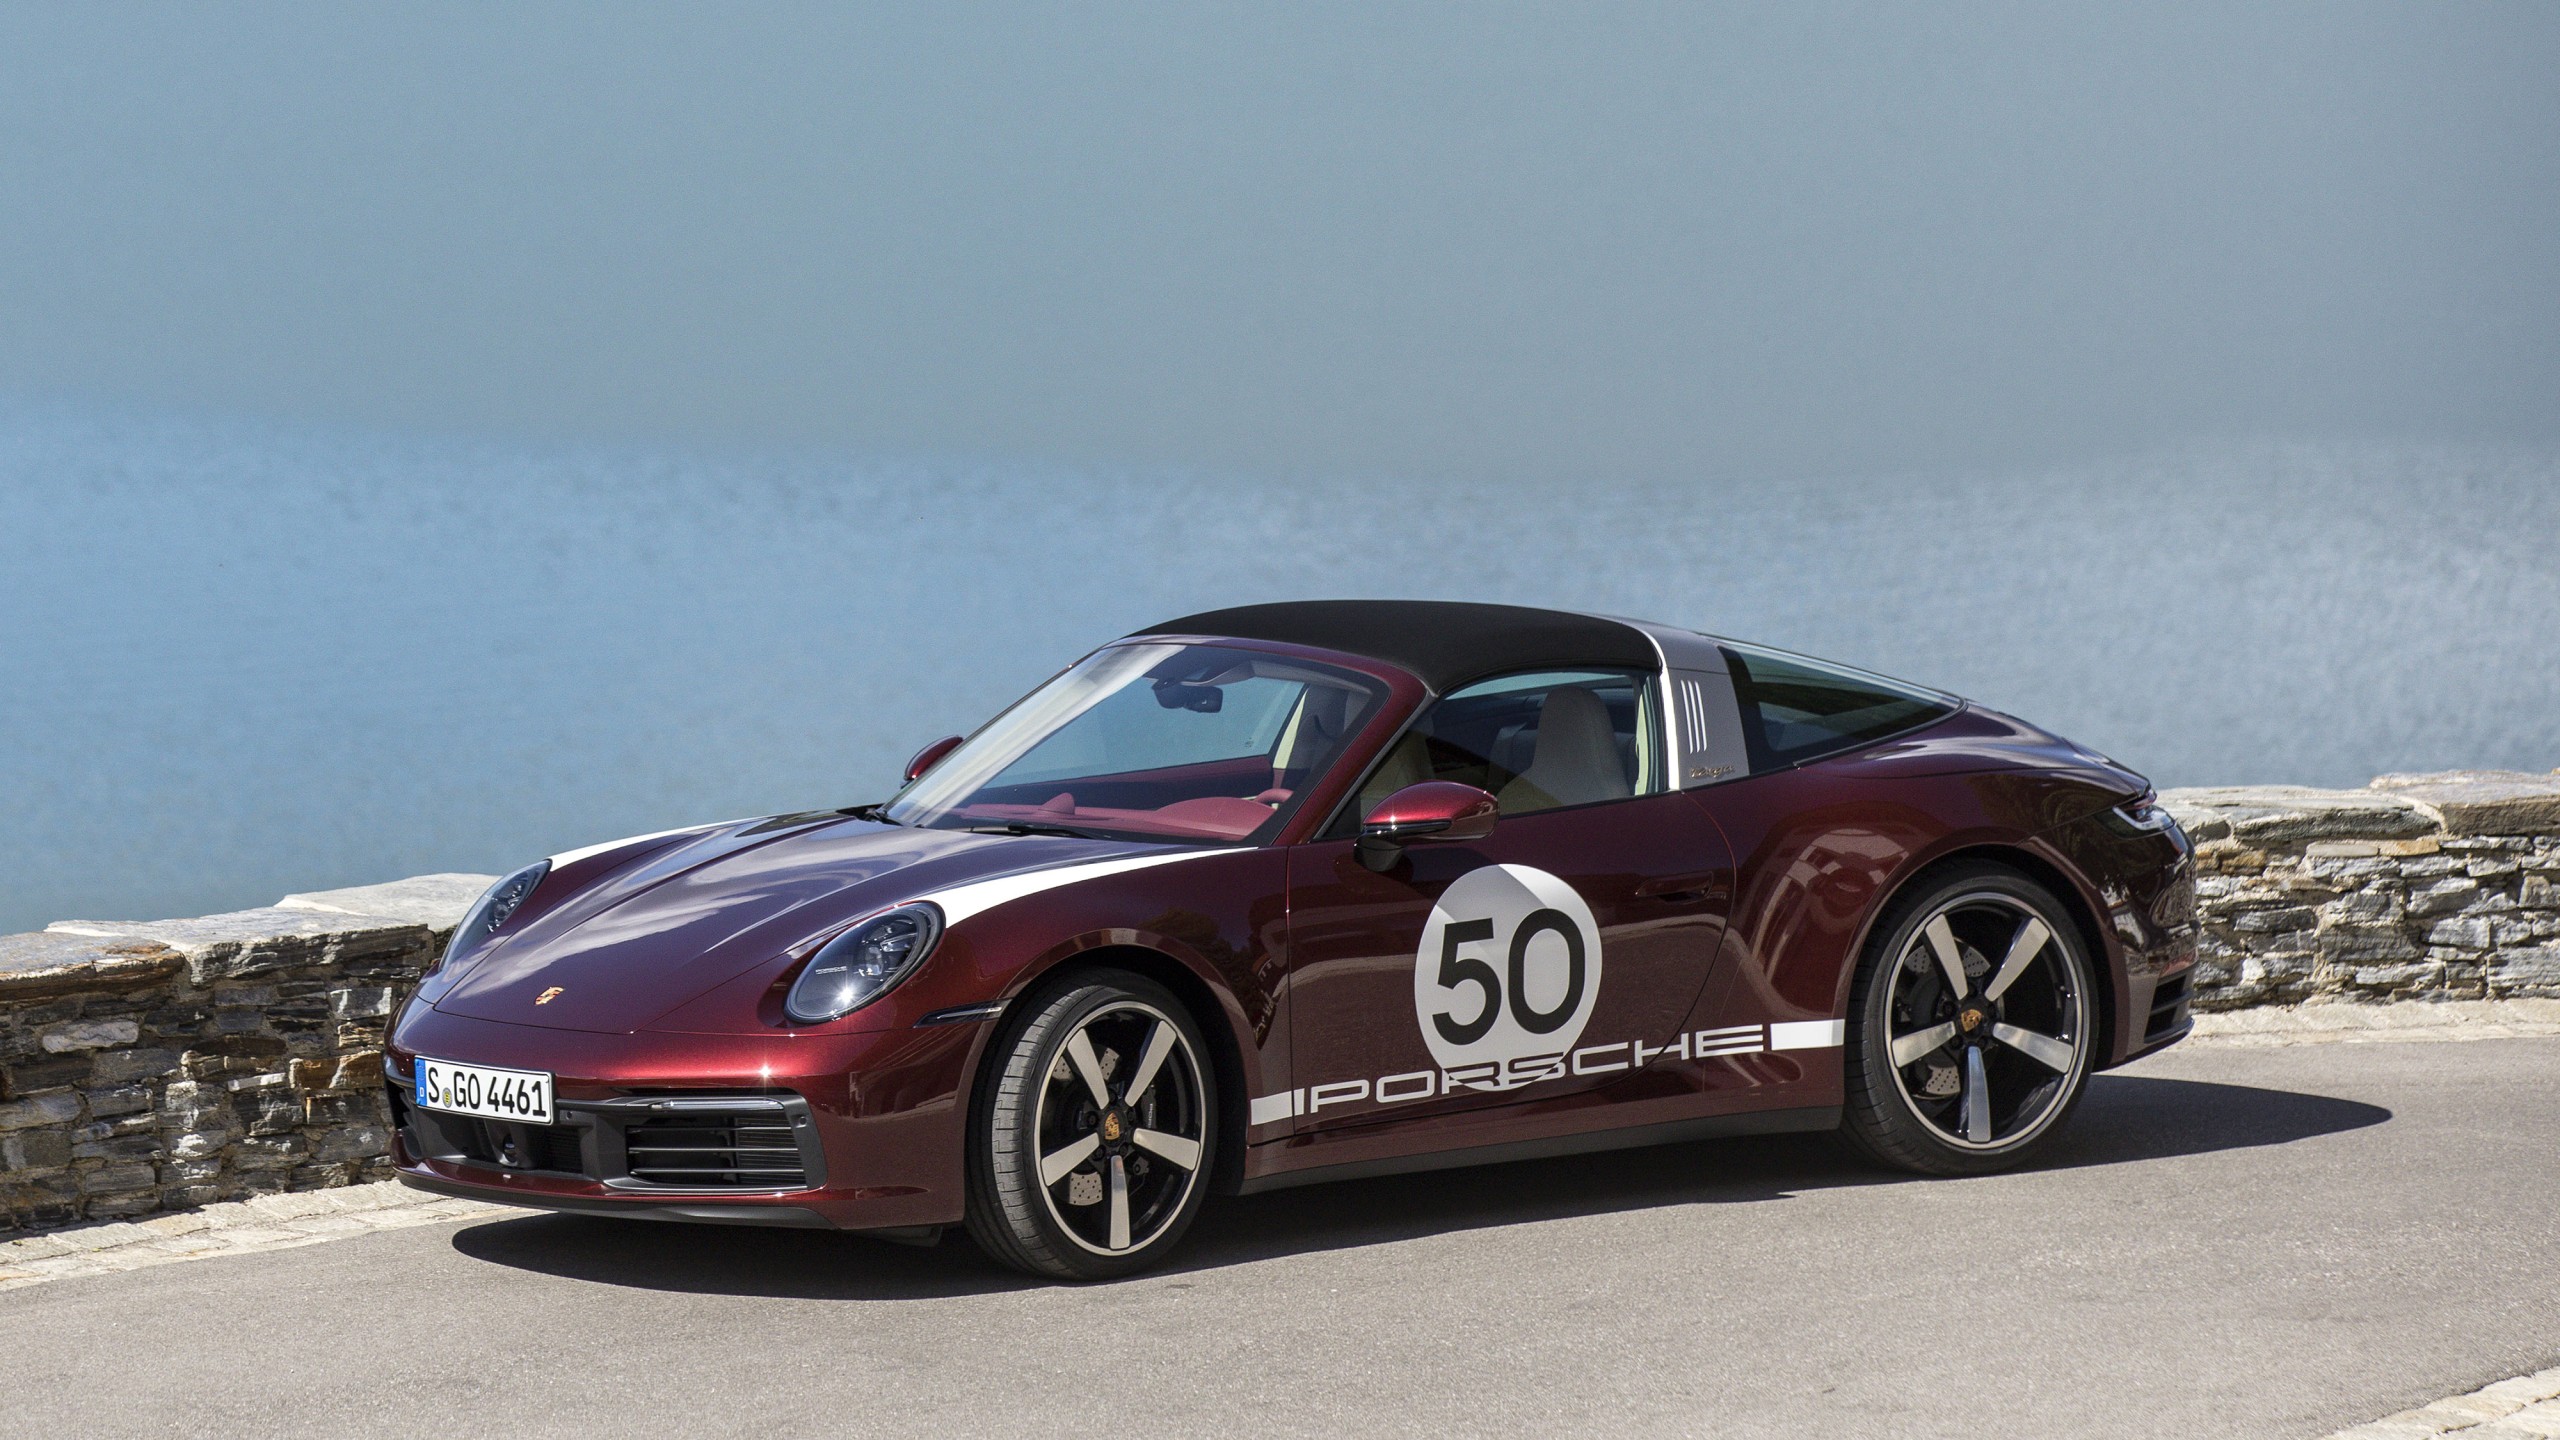 Porsche 911 Targa 4S Heritage Design Edition Worldwide 2020 4K